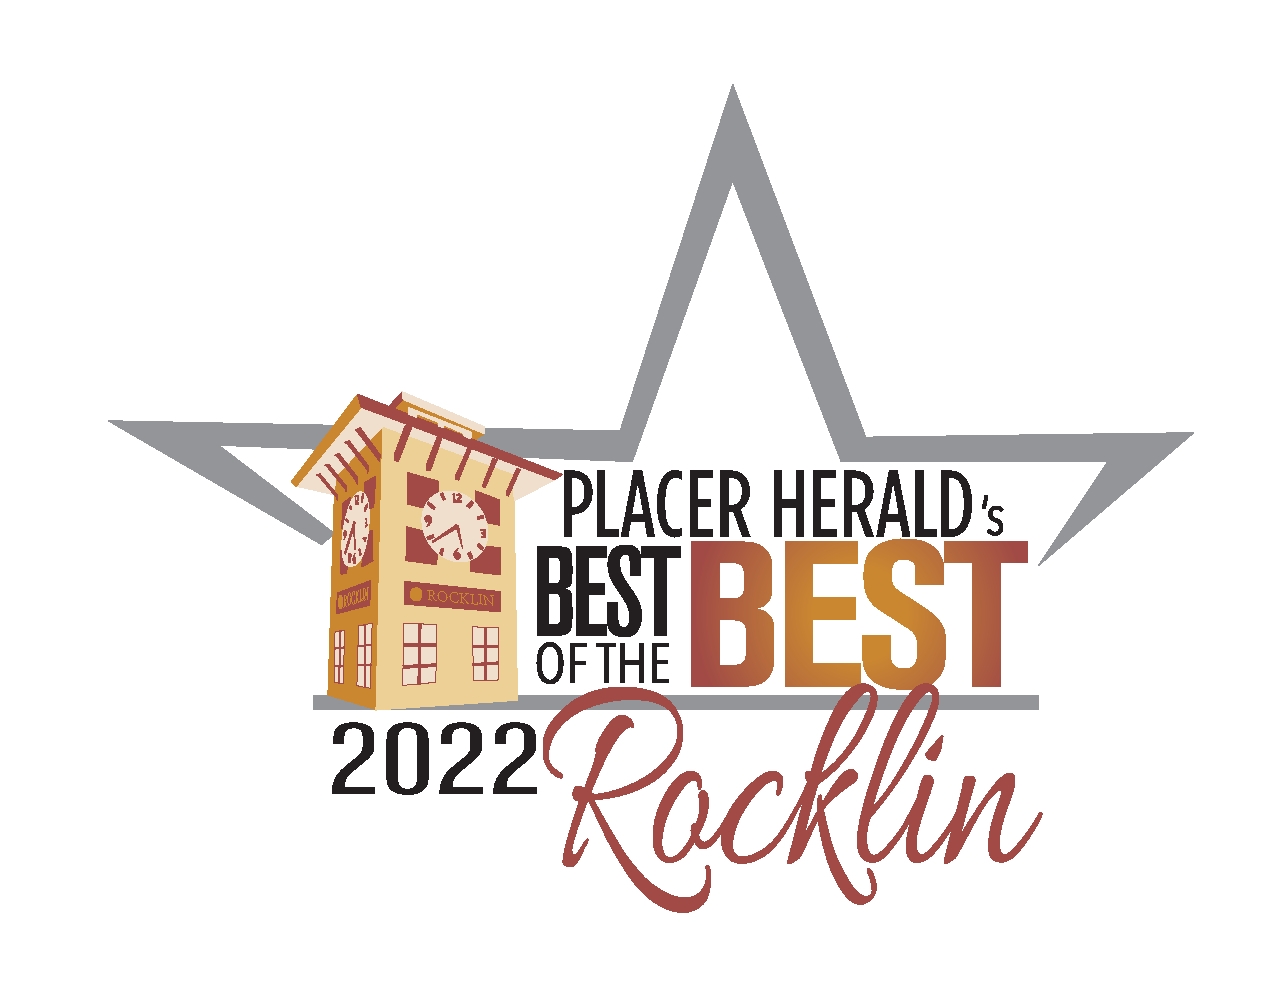 Best of the Best Rocklin 2022